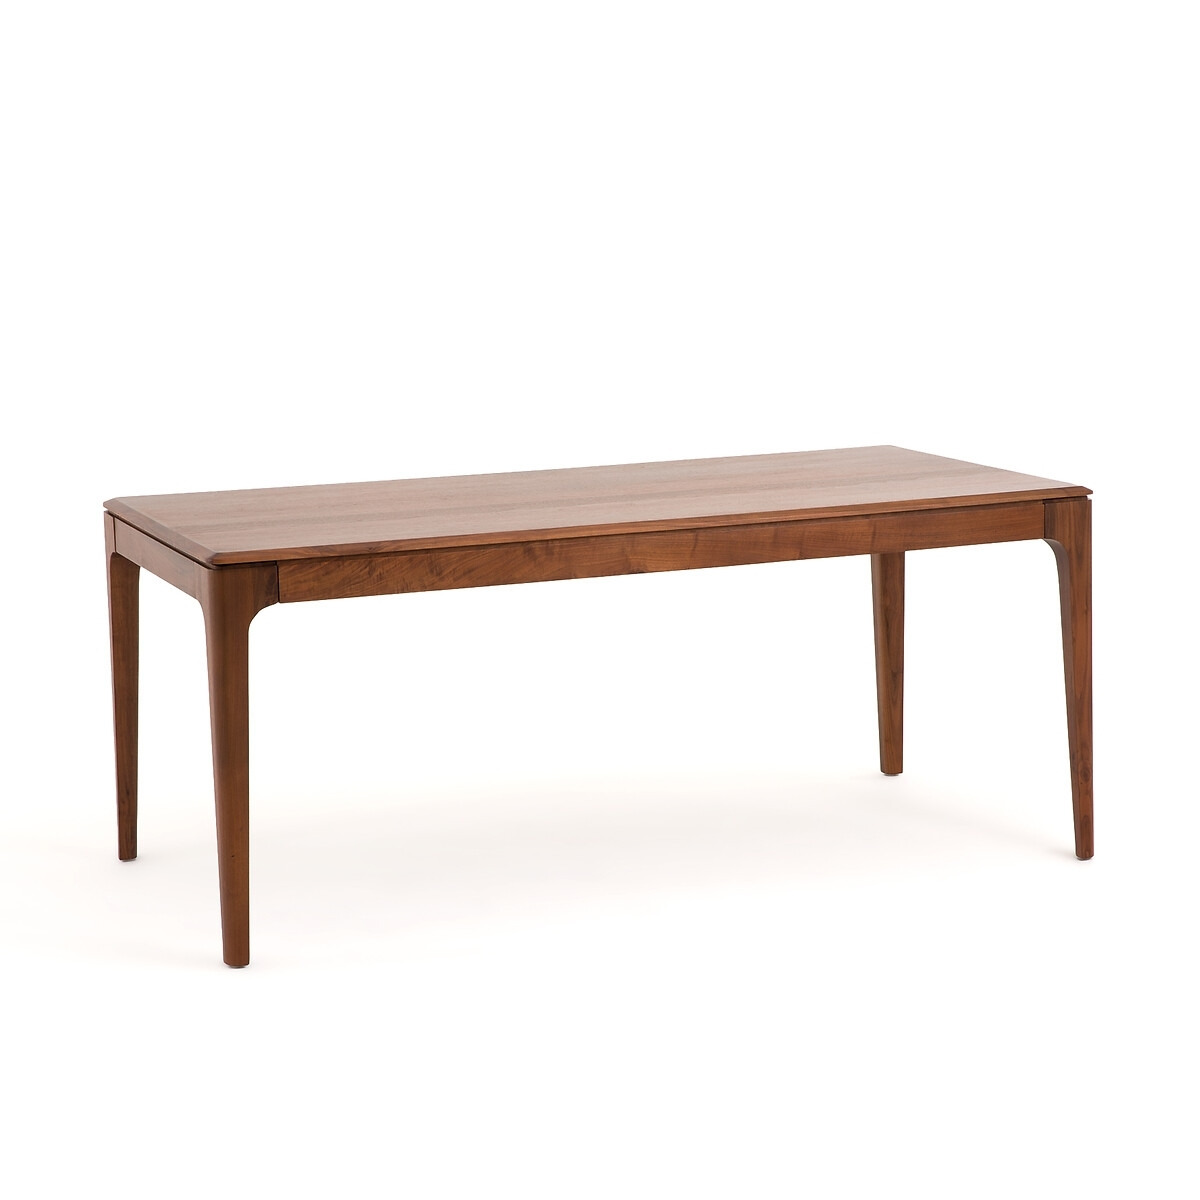 Sanara Solid Walnut Extendable Dining Table (Seats 8-12) - image 1